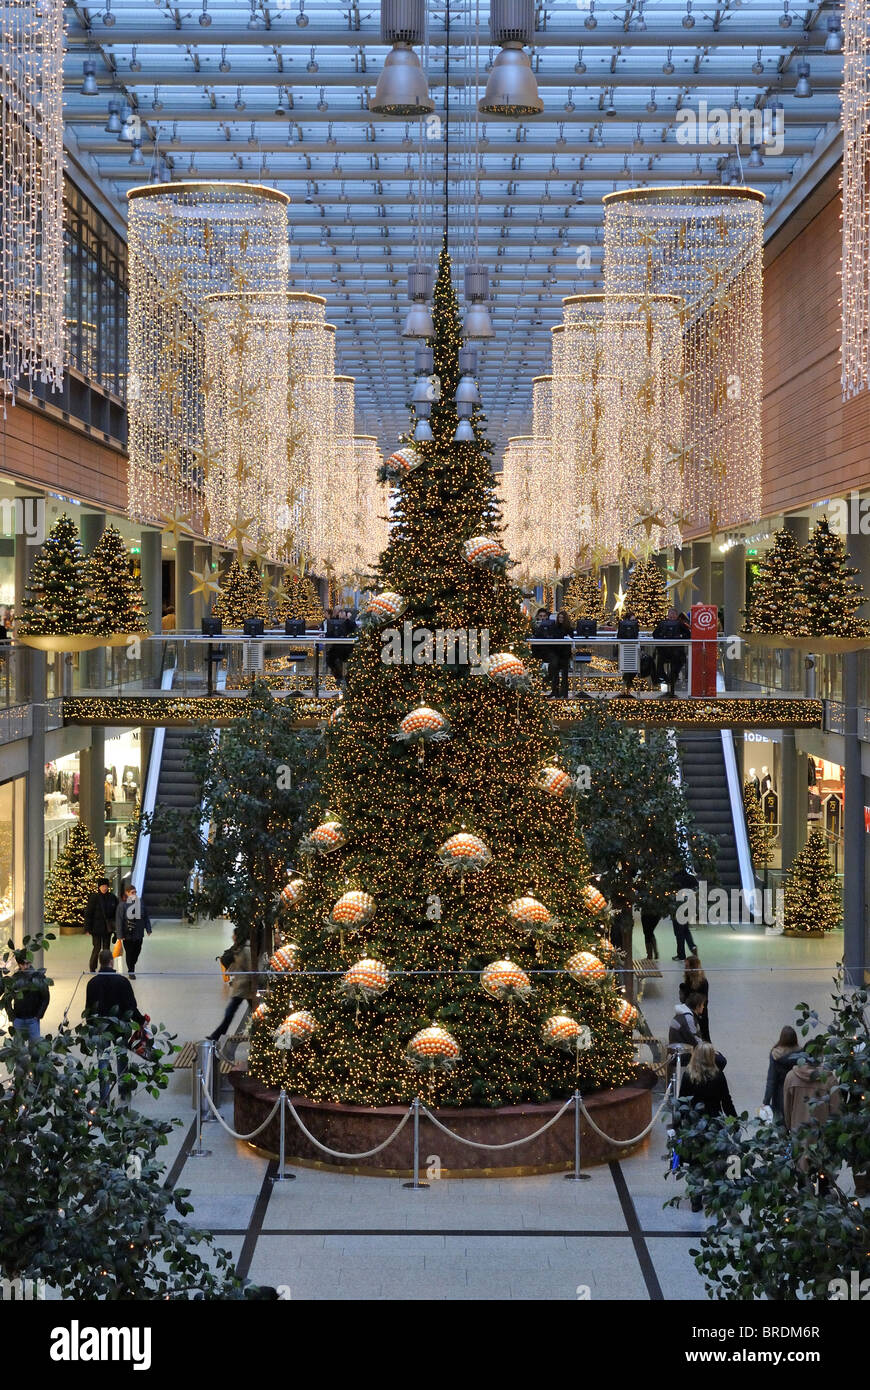 Potsdamer Platz Arkaden shopping mall at Christmas time, Potsdamer Platz, Tiergarten district, Berlin, Germany, Europe Stock Photo